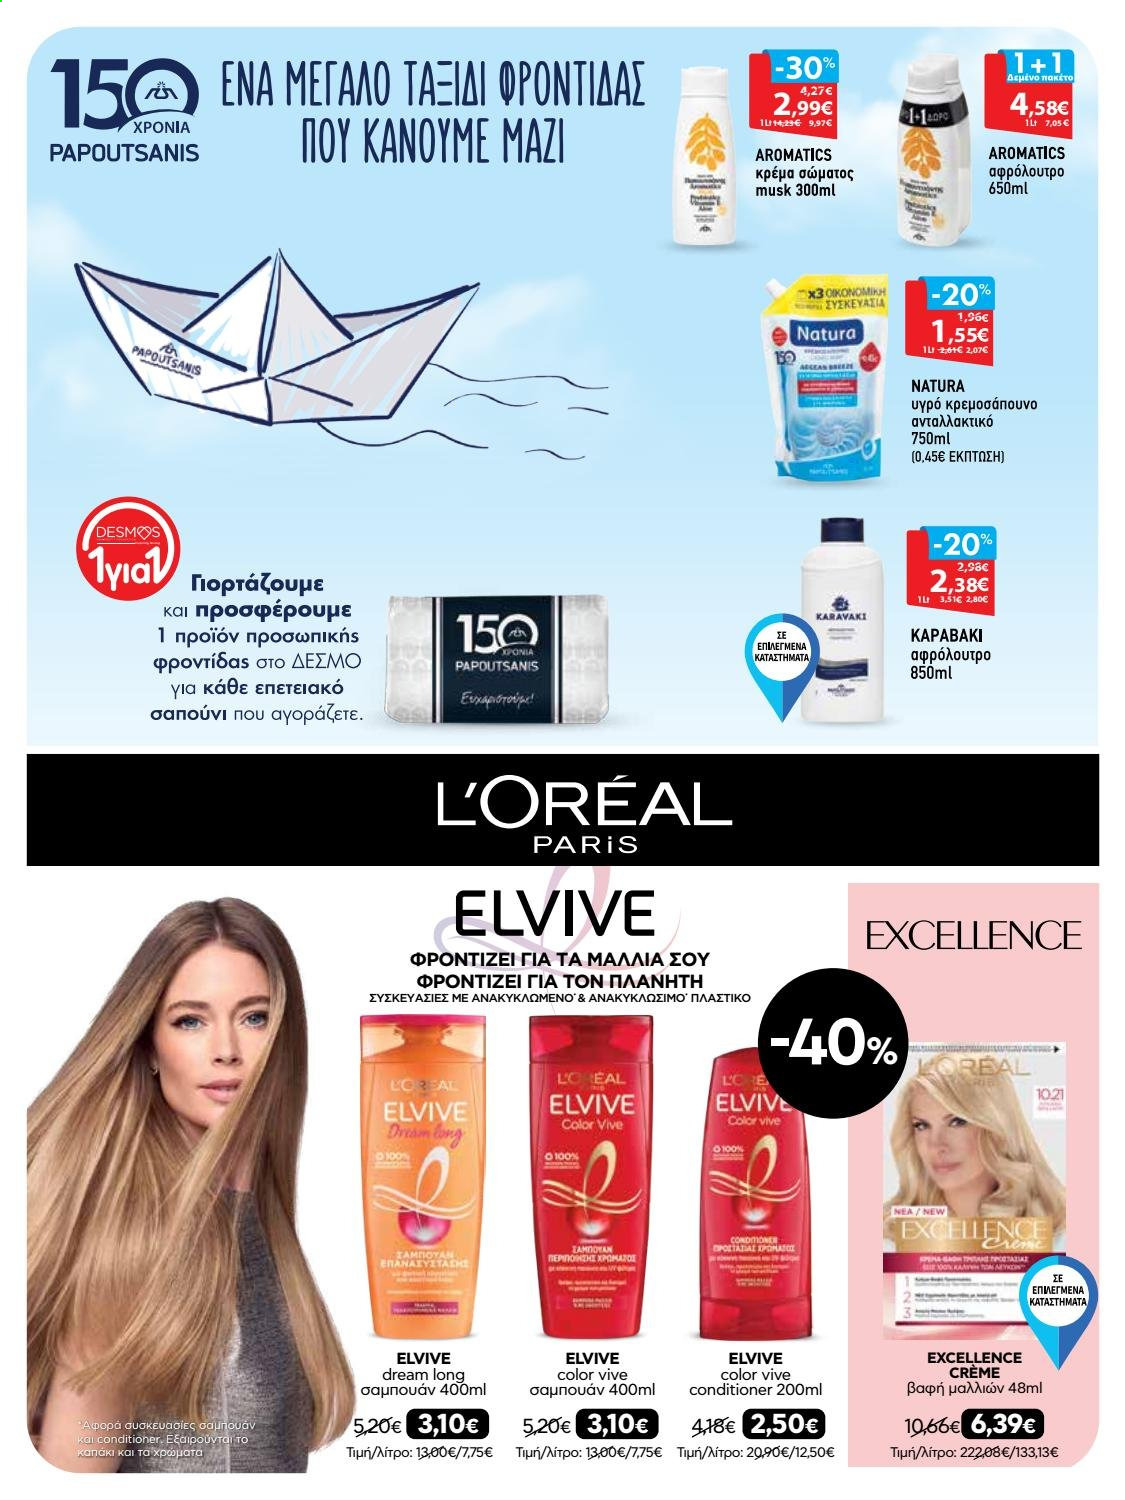 thumbnail - Φυλλάδια Bazaar - 08.07.2021 - 21.07.2021 - Εκπτωτικά προϊόντα - Elvive, αφρόλουτρο, σαμπουάν, σαπούνι, L'Oréal Paris, excellence, καπάκι. Σελίδα 21.